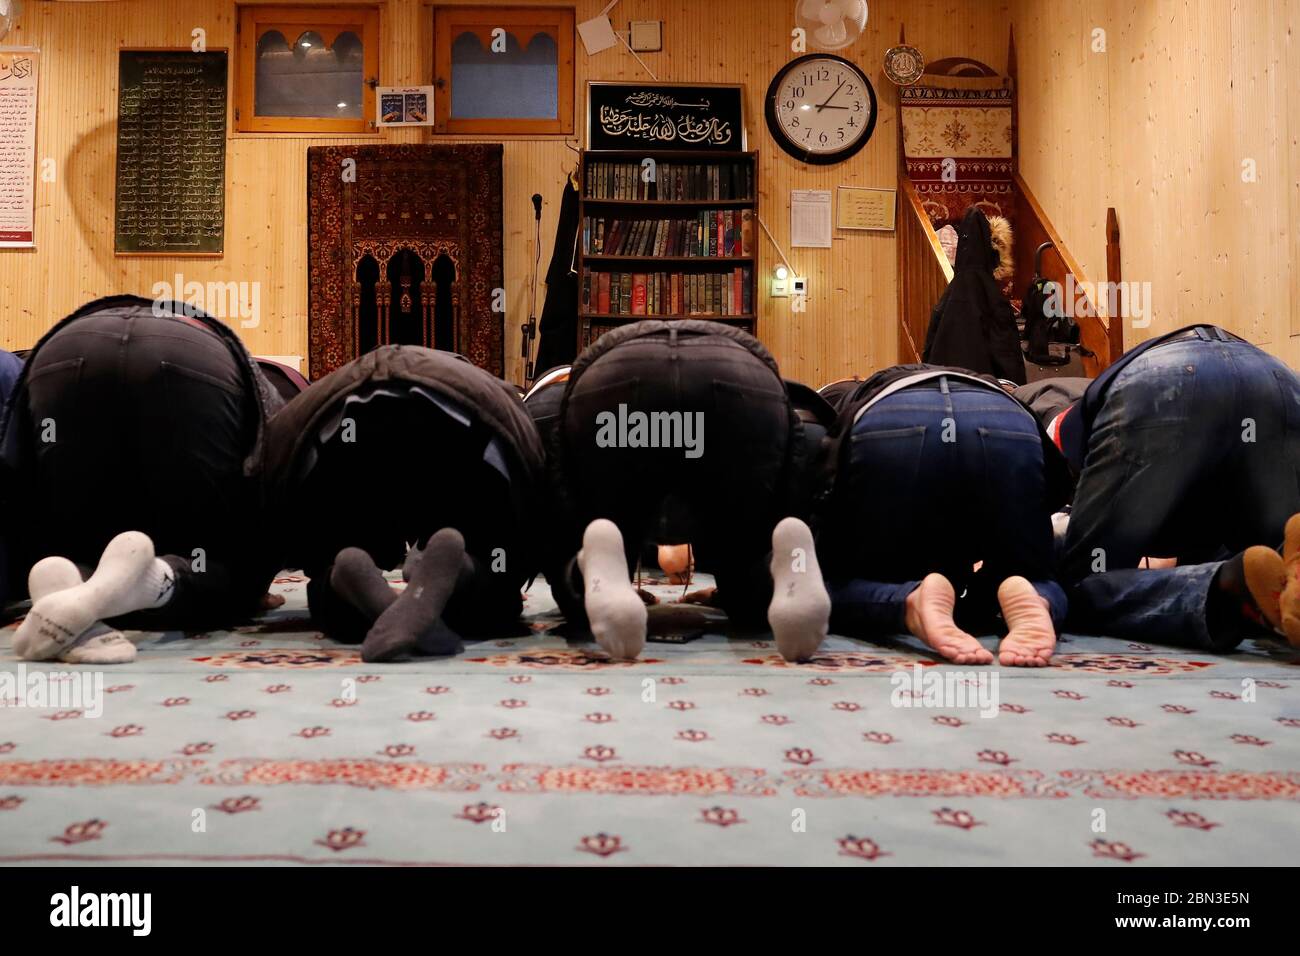 The Centre Islamique de Geneve (Islamic Center of Geneva).  The Muslim Brotherhood.   Muslim man praying together inside the mosque.  Geneva. Switzerl Stock Photo